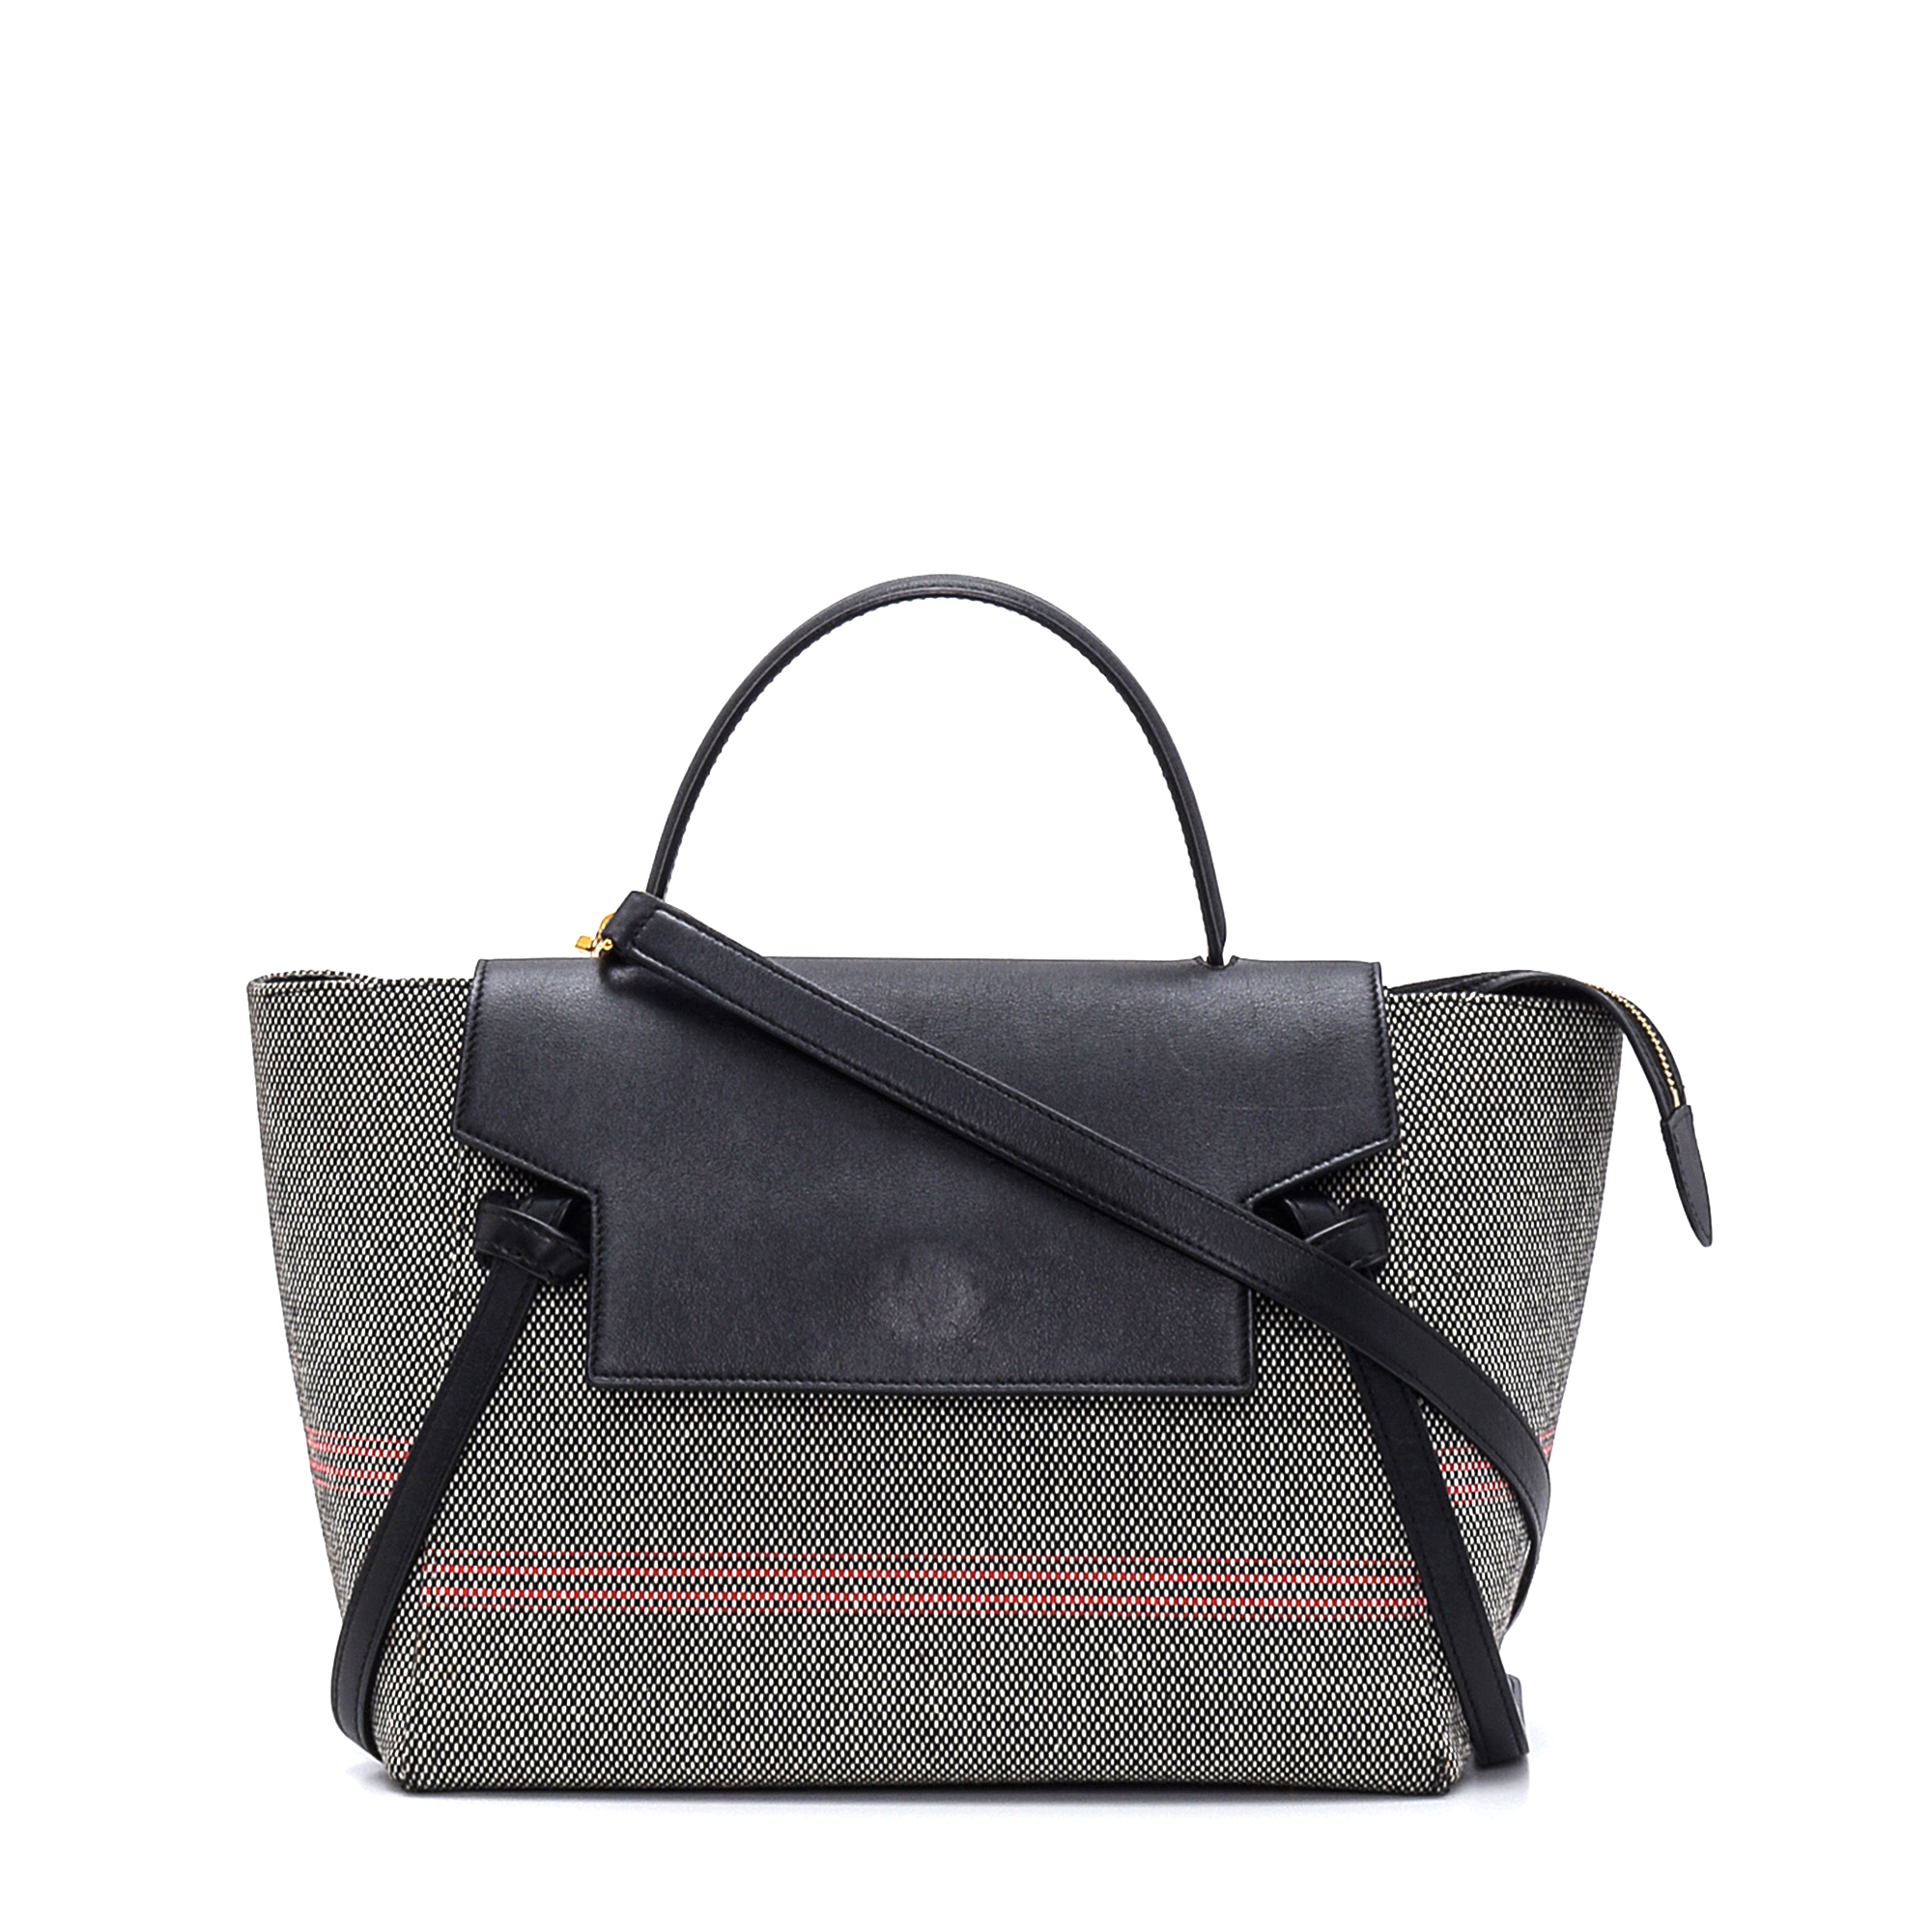 Celine - Black / White Striped Canvas and Leather Medium Belt Bag